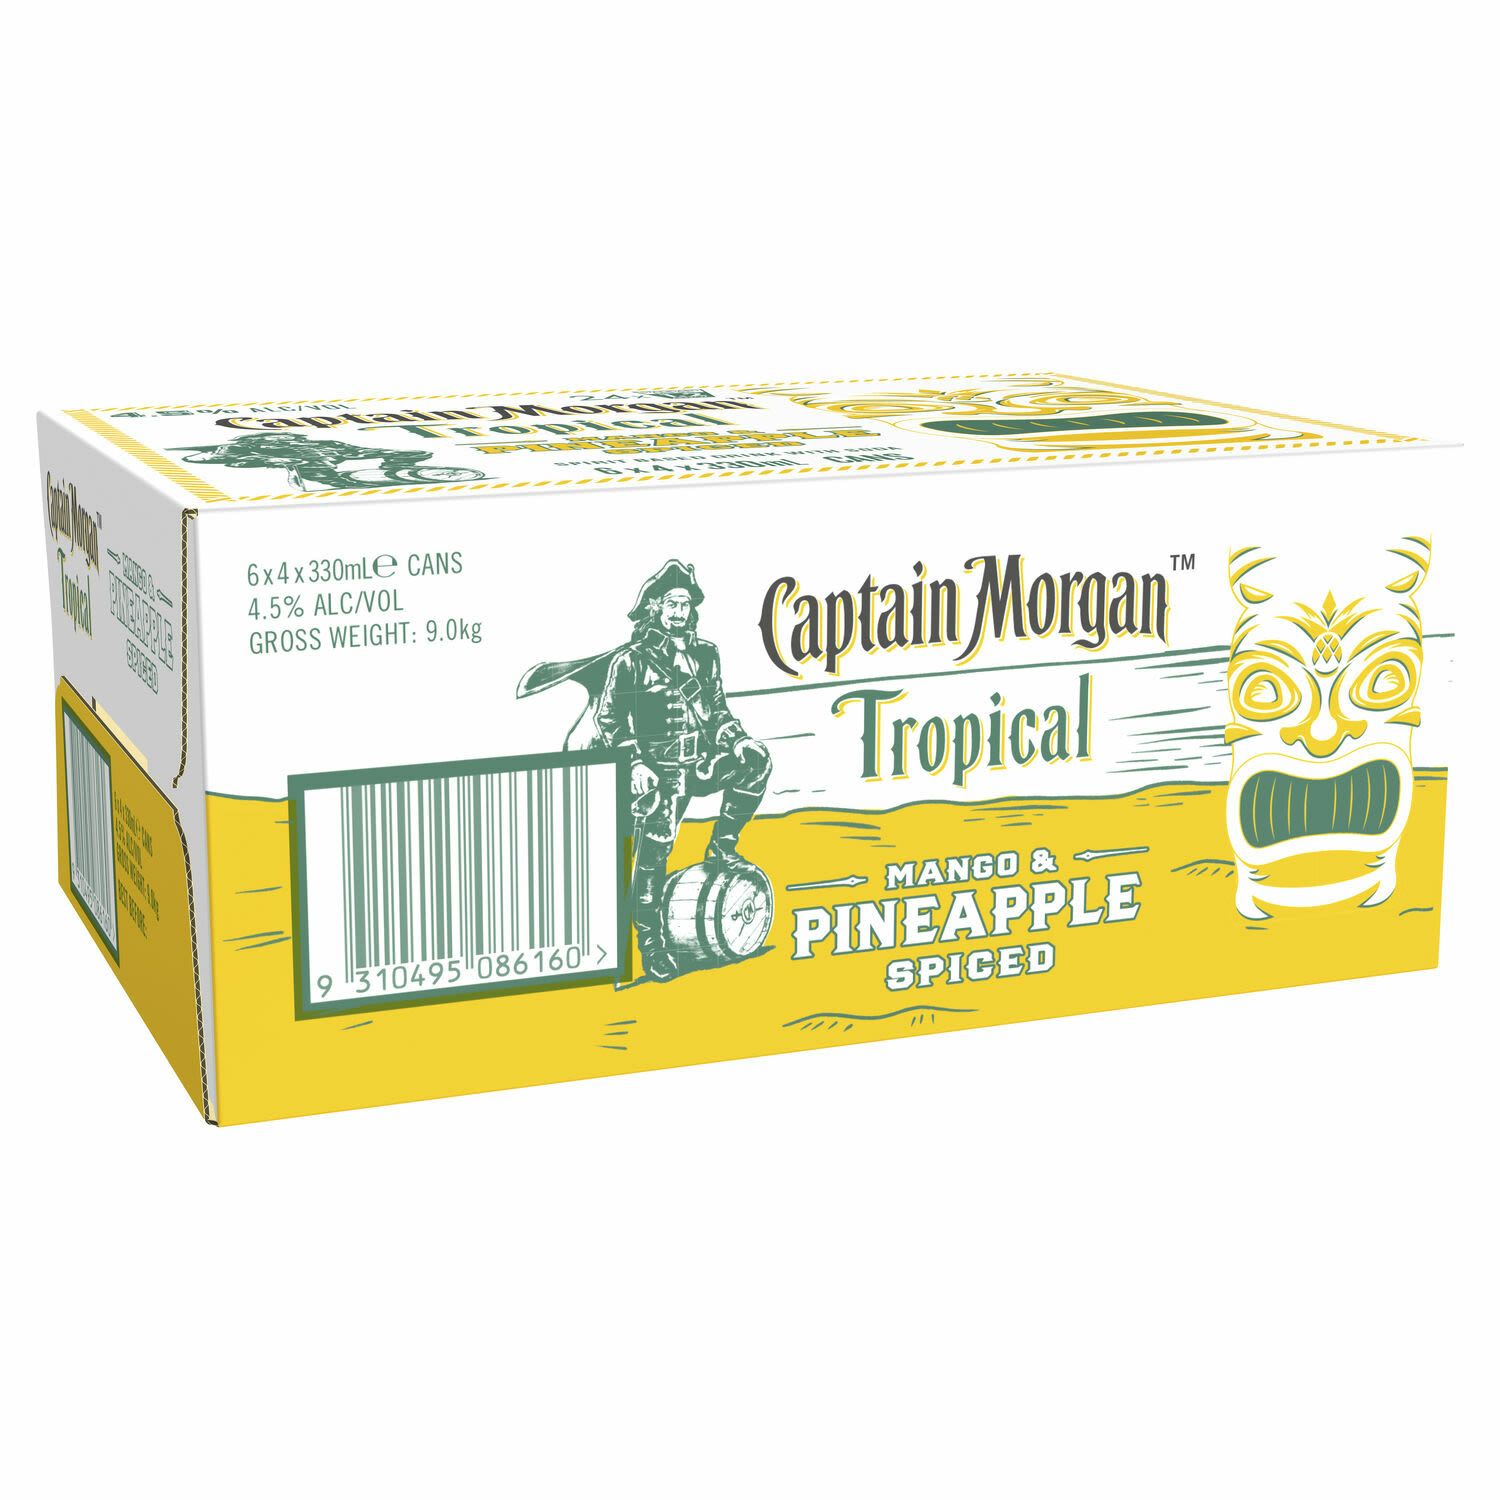 Captain Morgan Tropical Mango & Pineapple Spiced Can 330mL 24 Pack